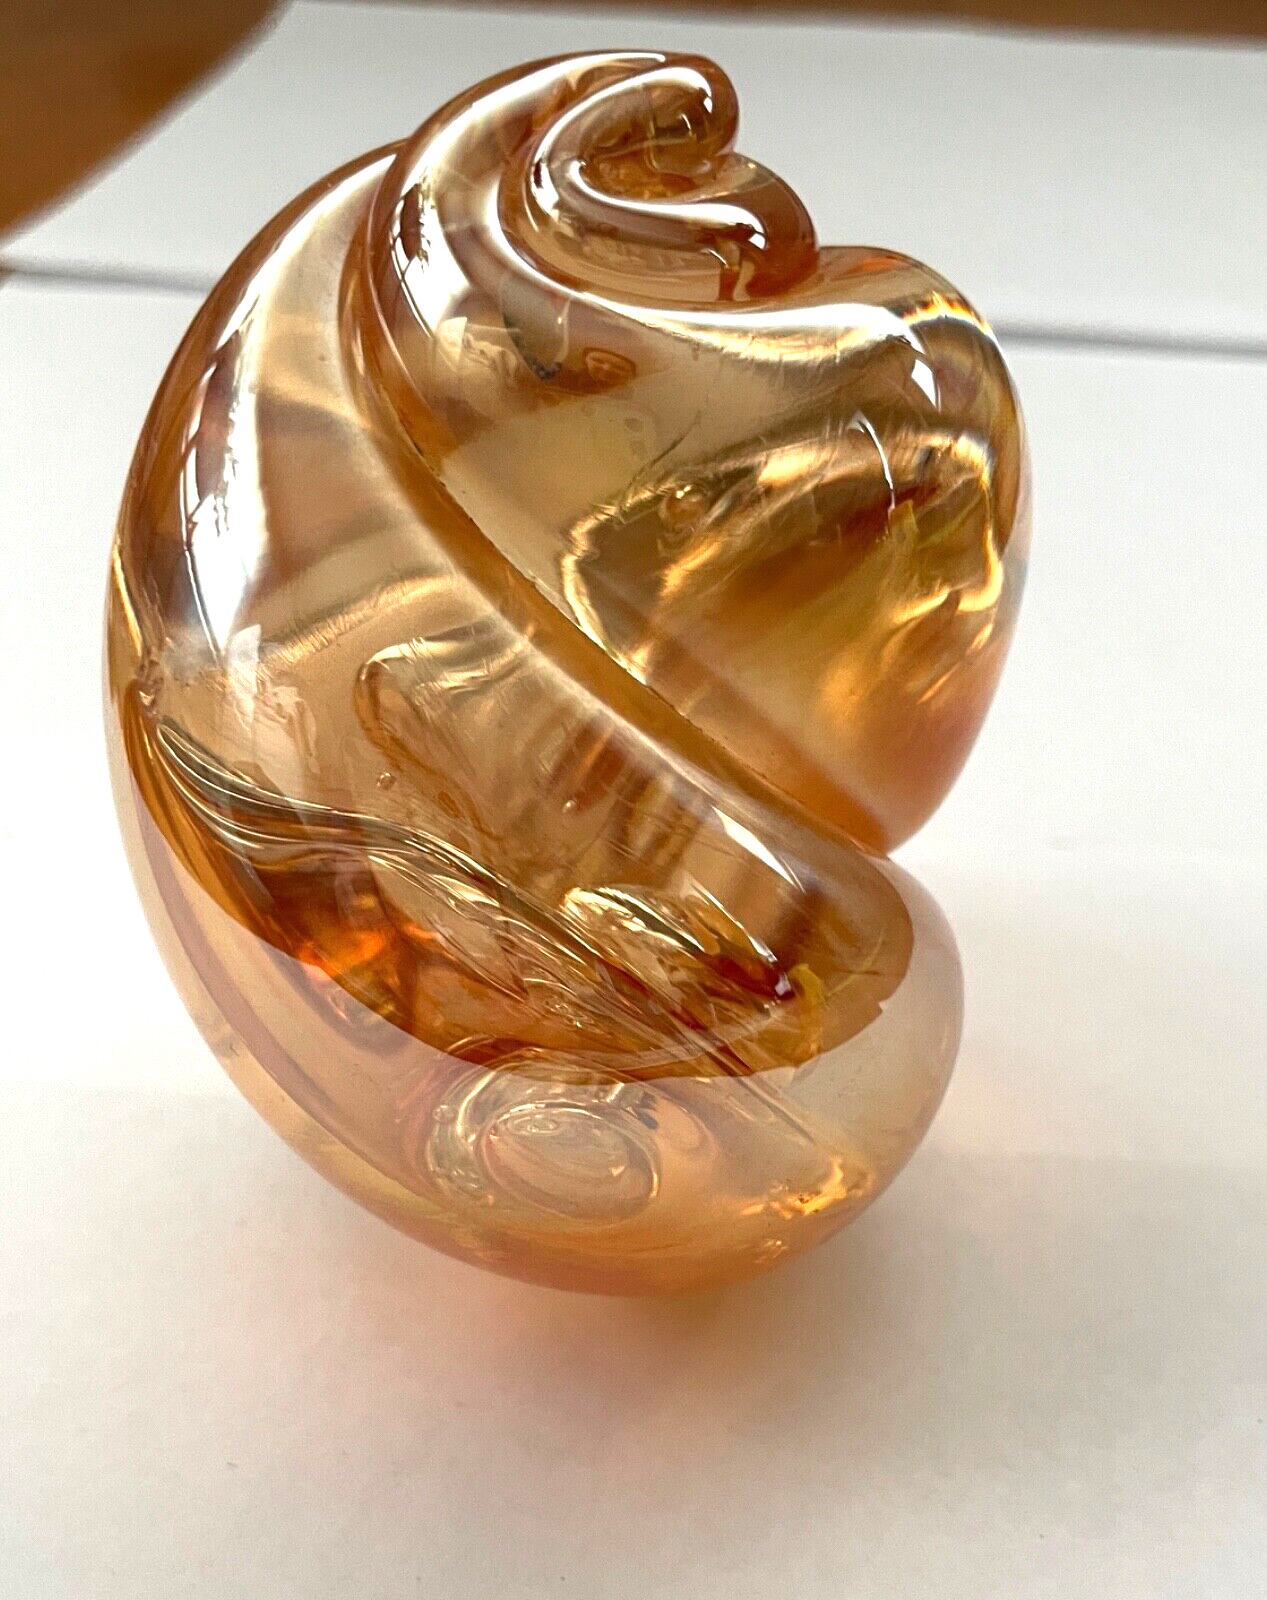 Gorgeous Rollin Karg Signed Twist Sculpture Art Glass Paperweight